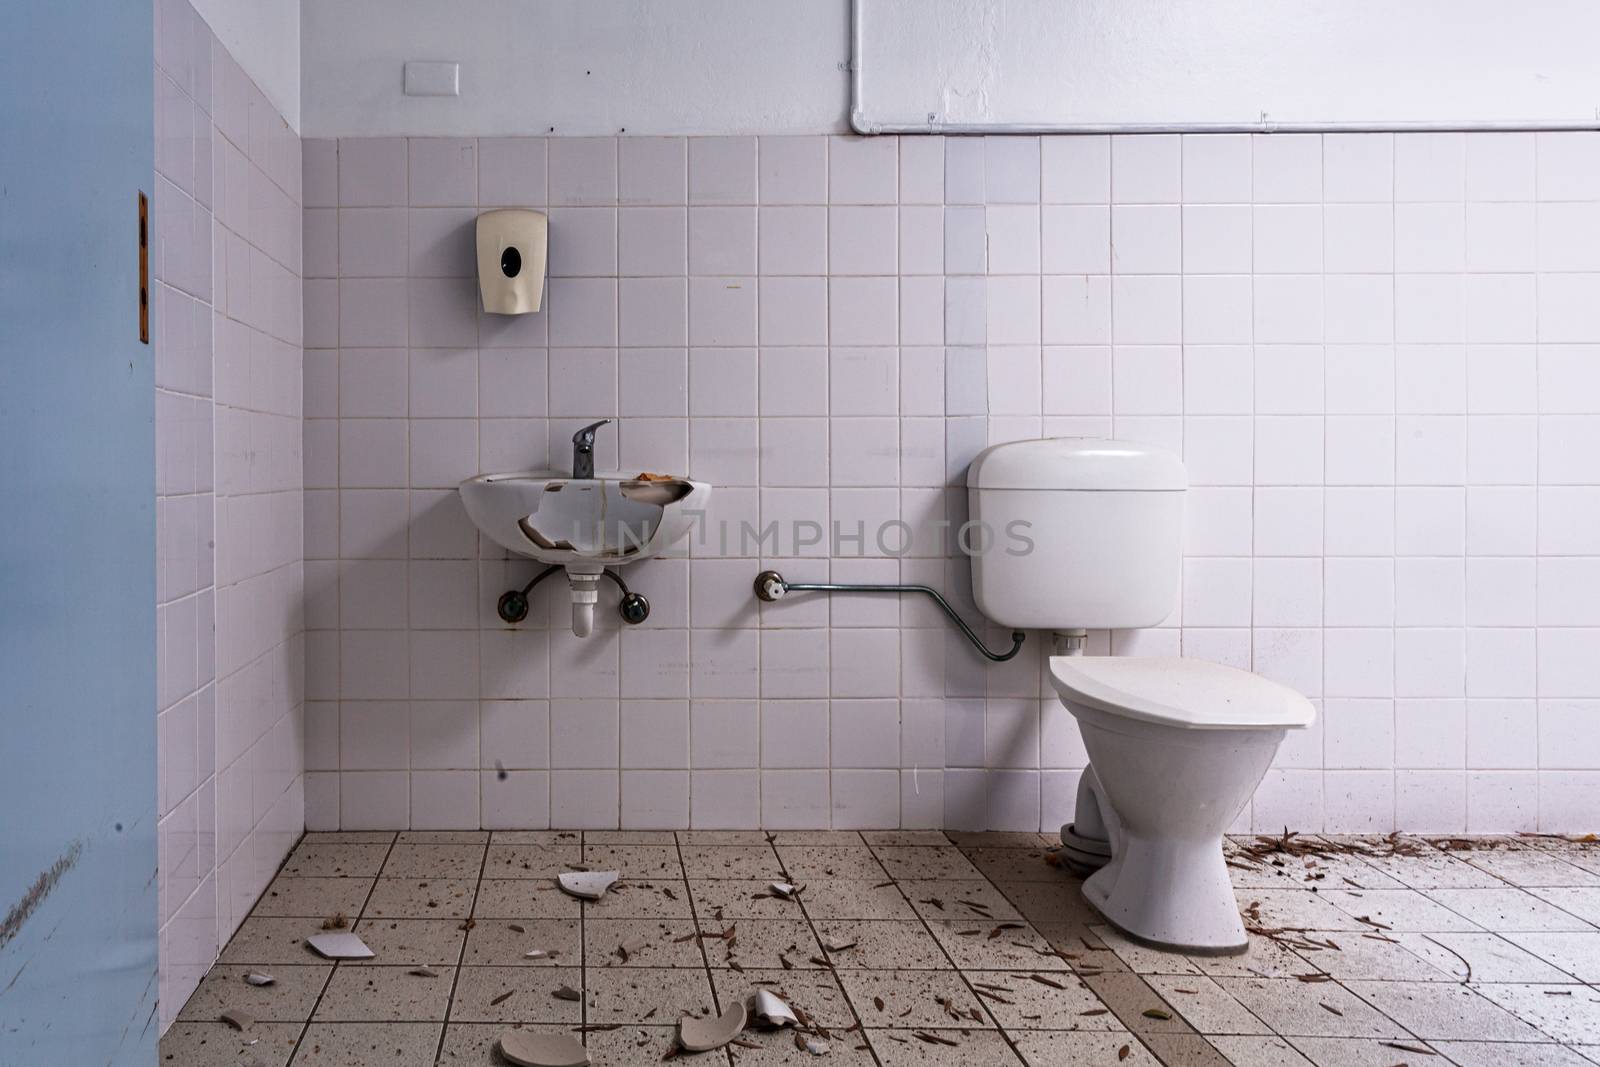 Vandalism of bathroom facility of old abandoned asylum